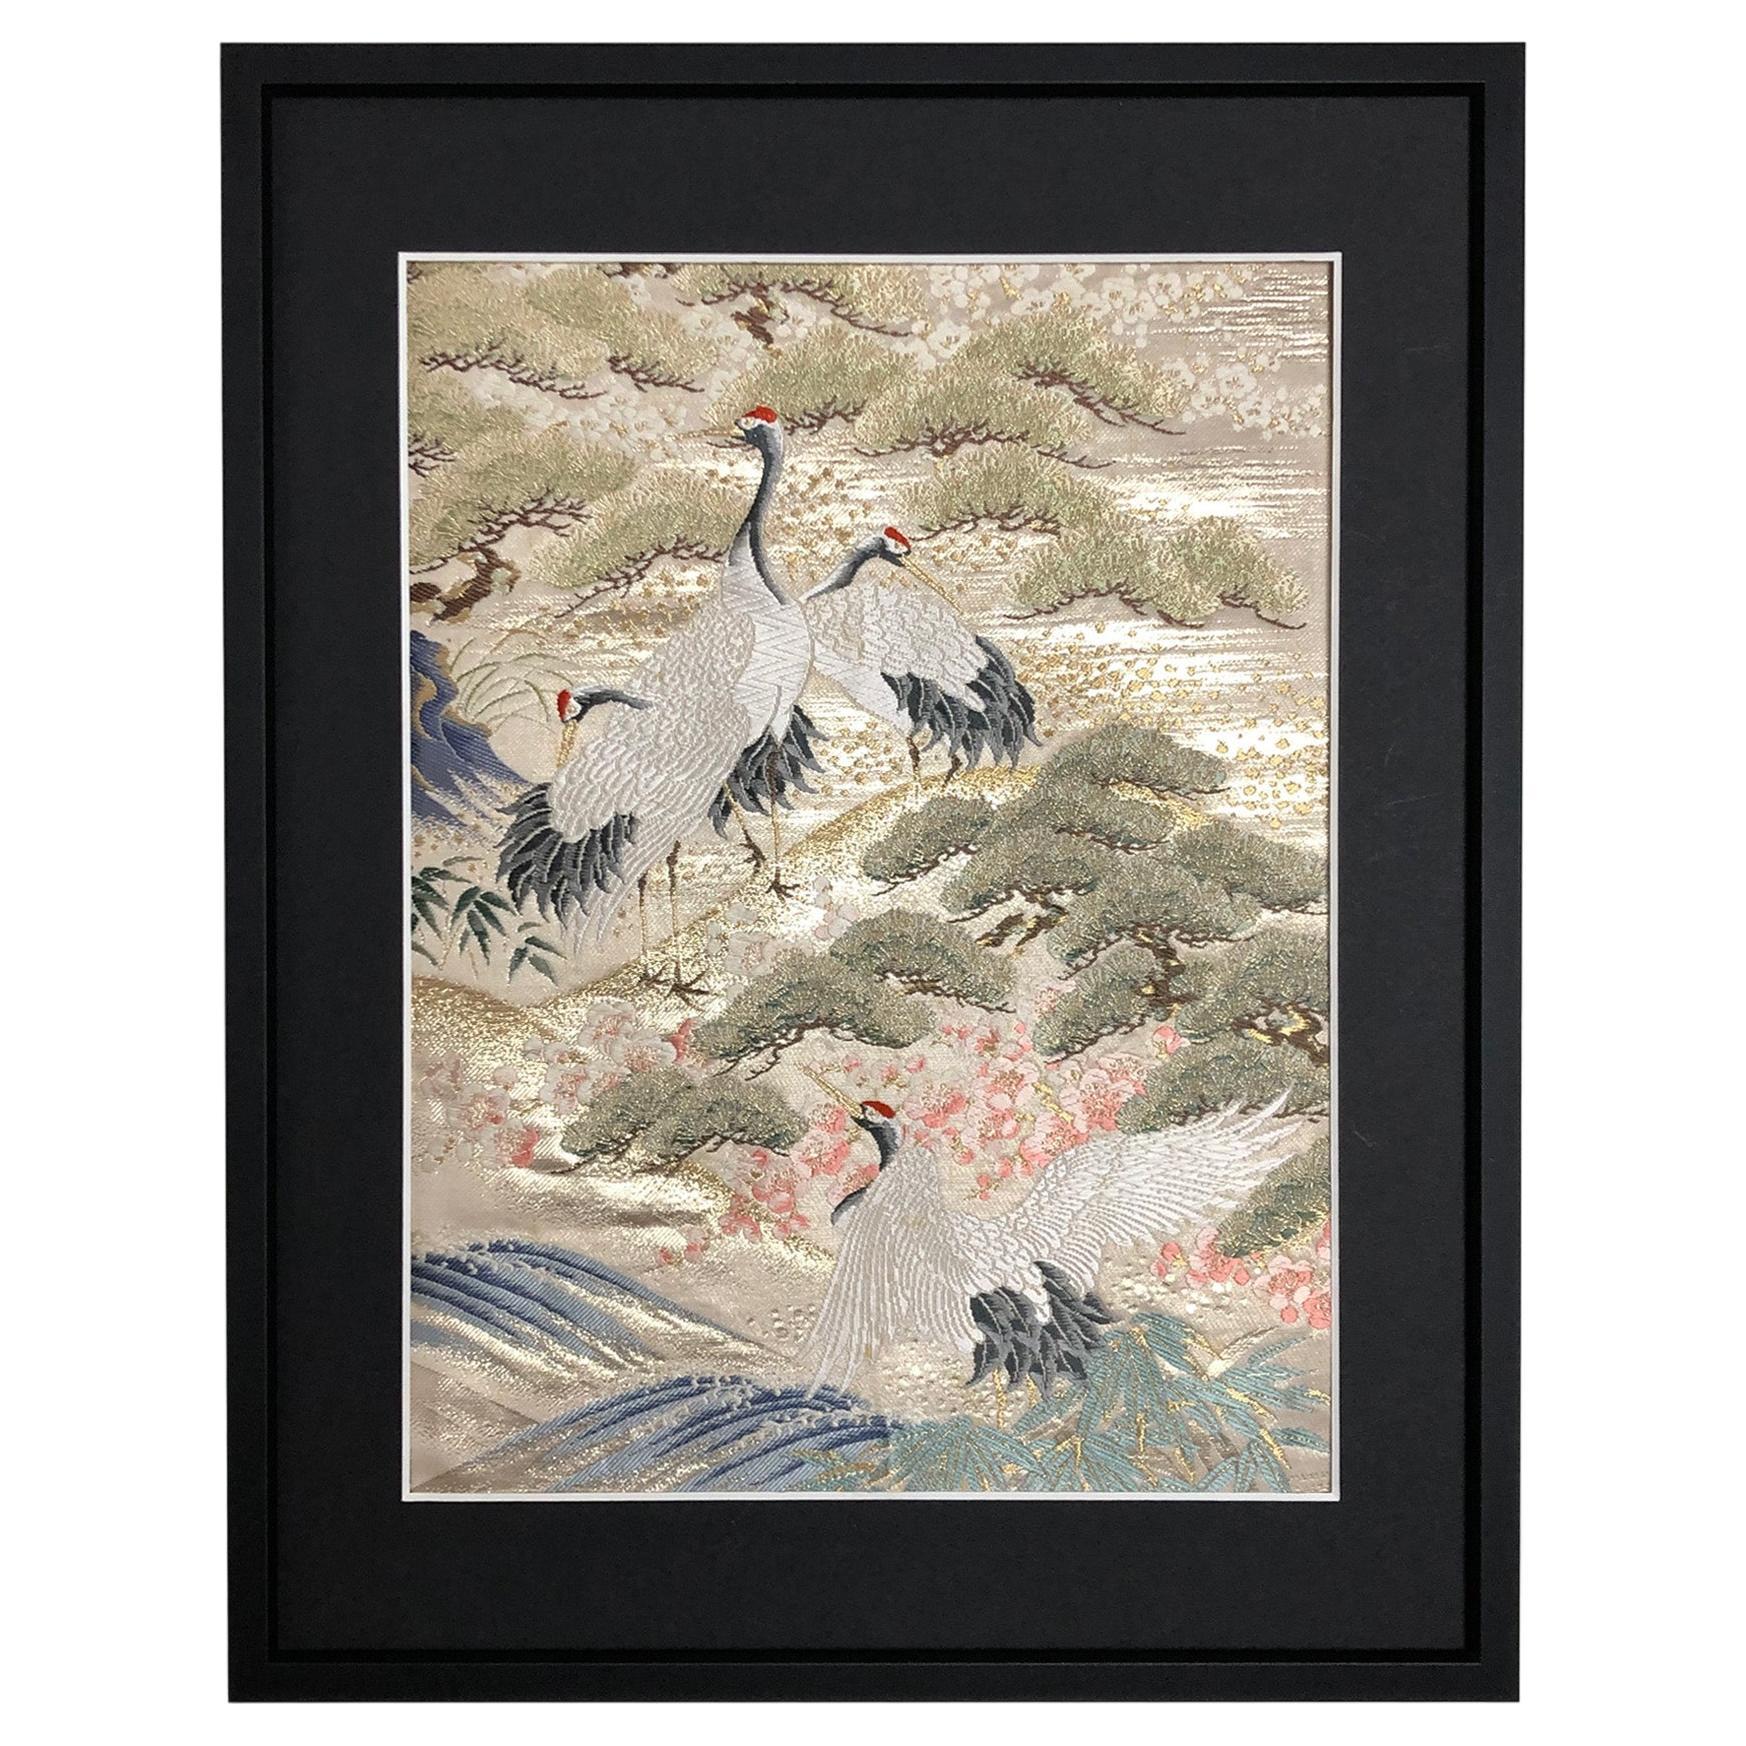 "The Crane's Departure" by Kimono-Couture, Kimono Art, Textile Art, Japanese Art